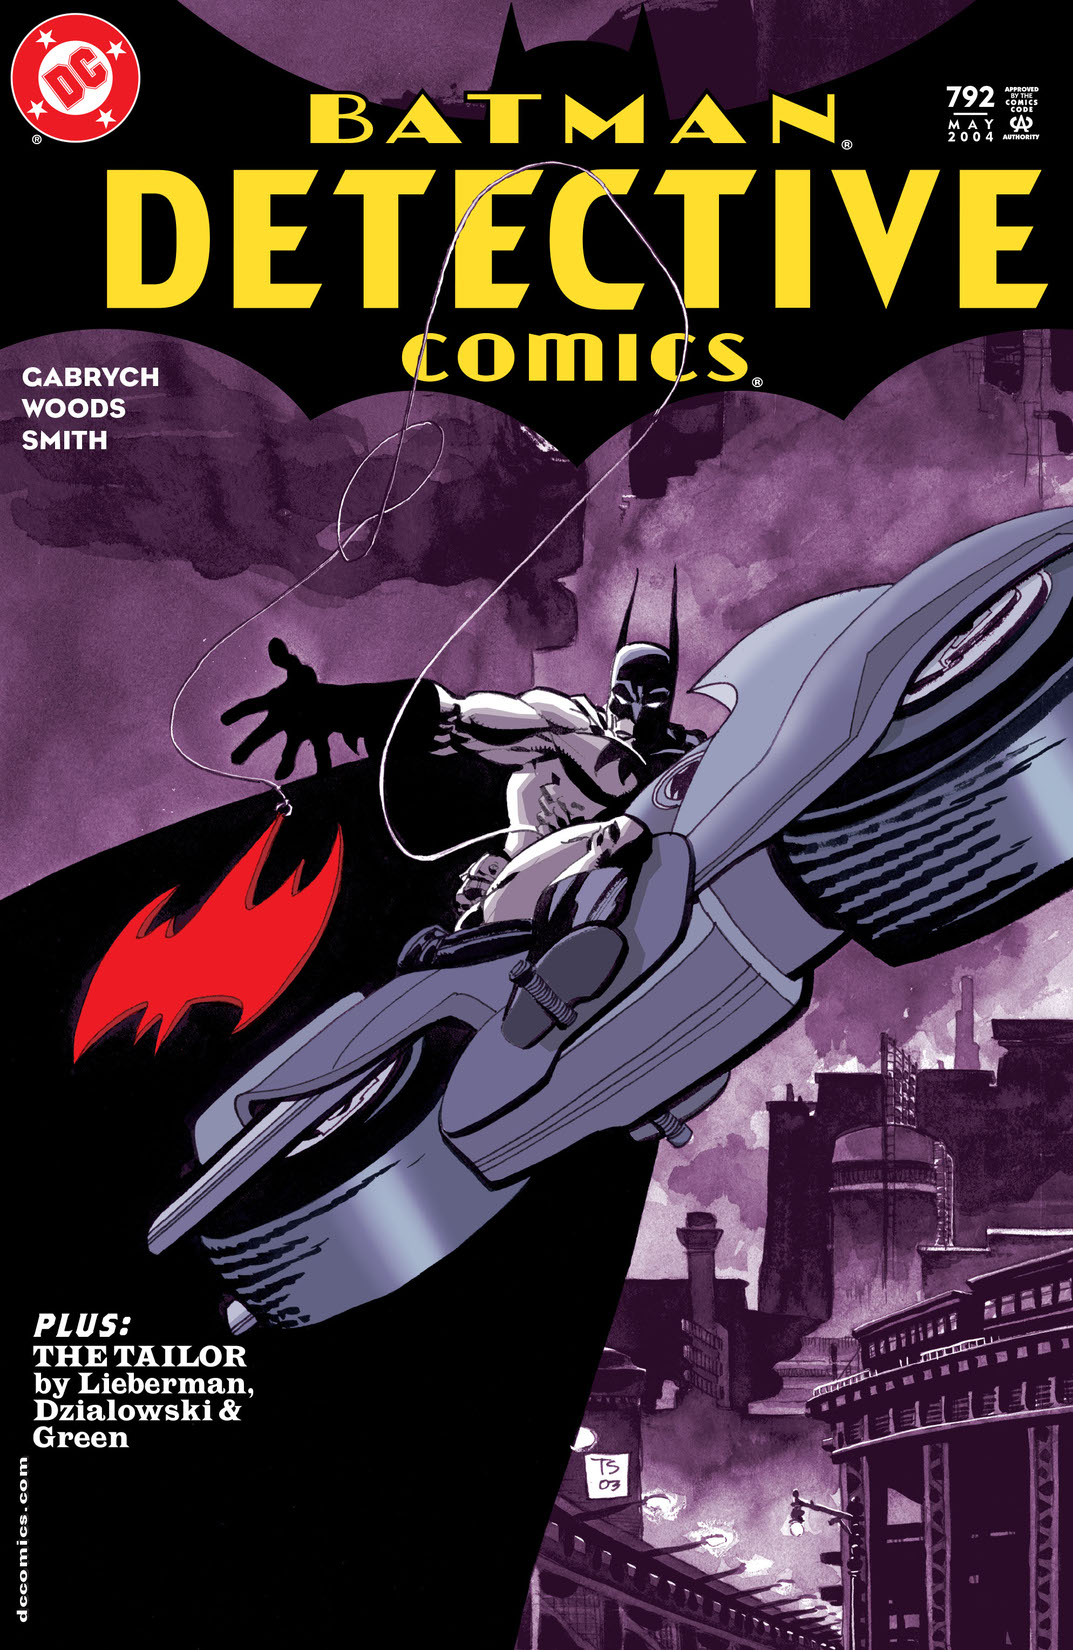 Detective Comics (1937-) #792 preview images